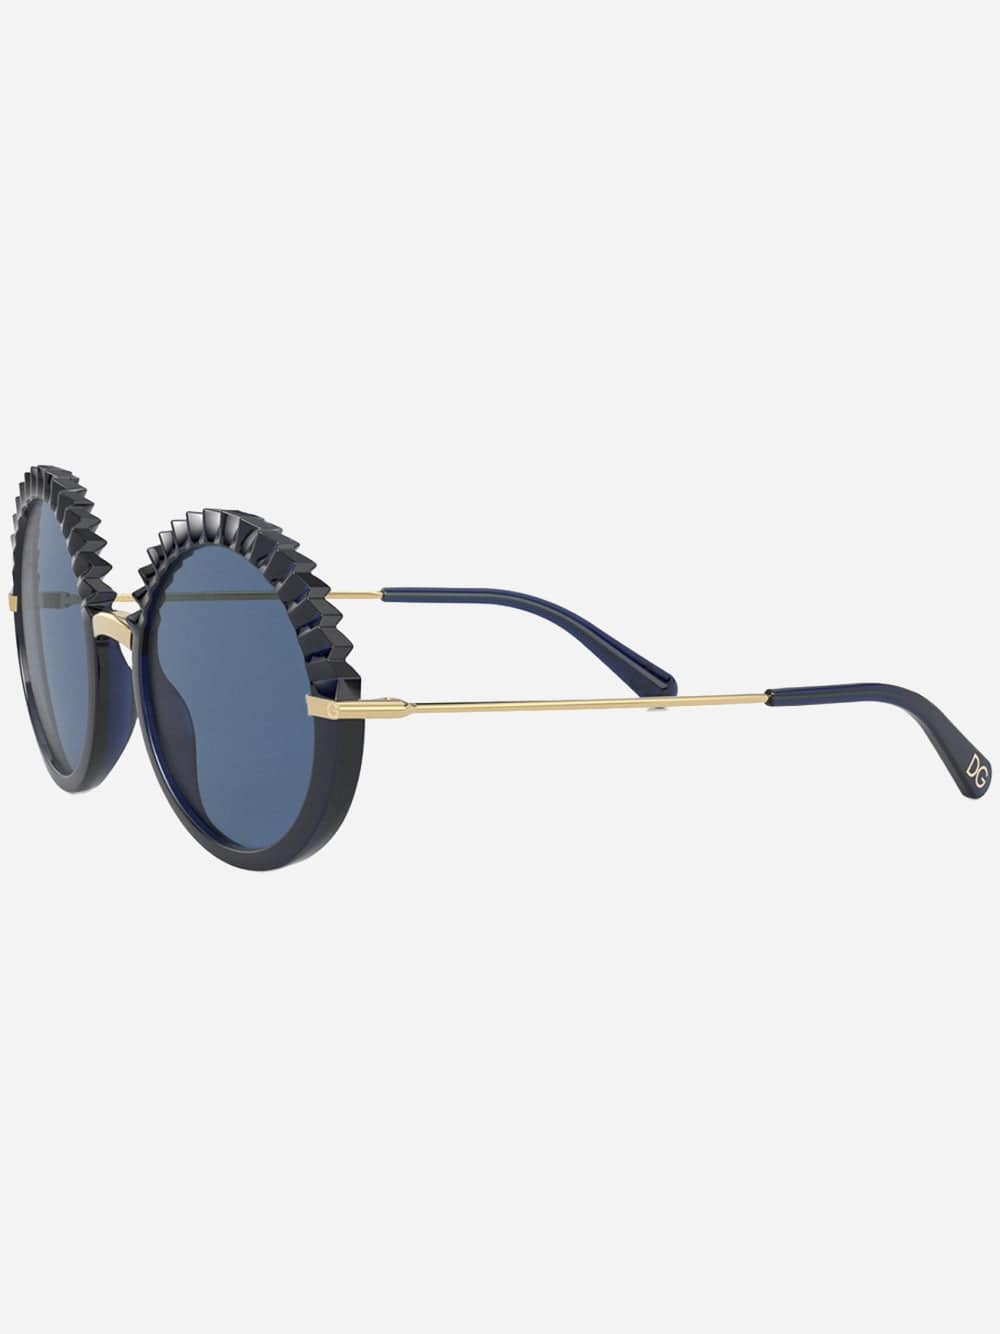 Dolce & Gabbana DG6130 Opal Sunglasses